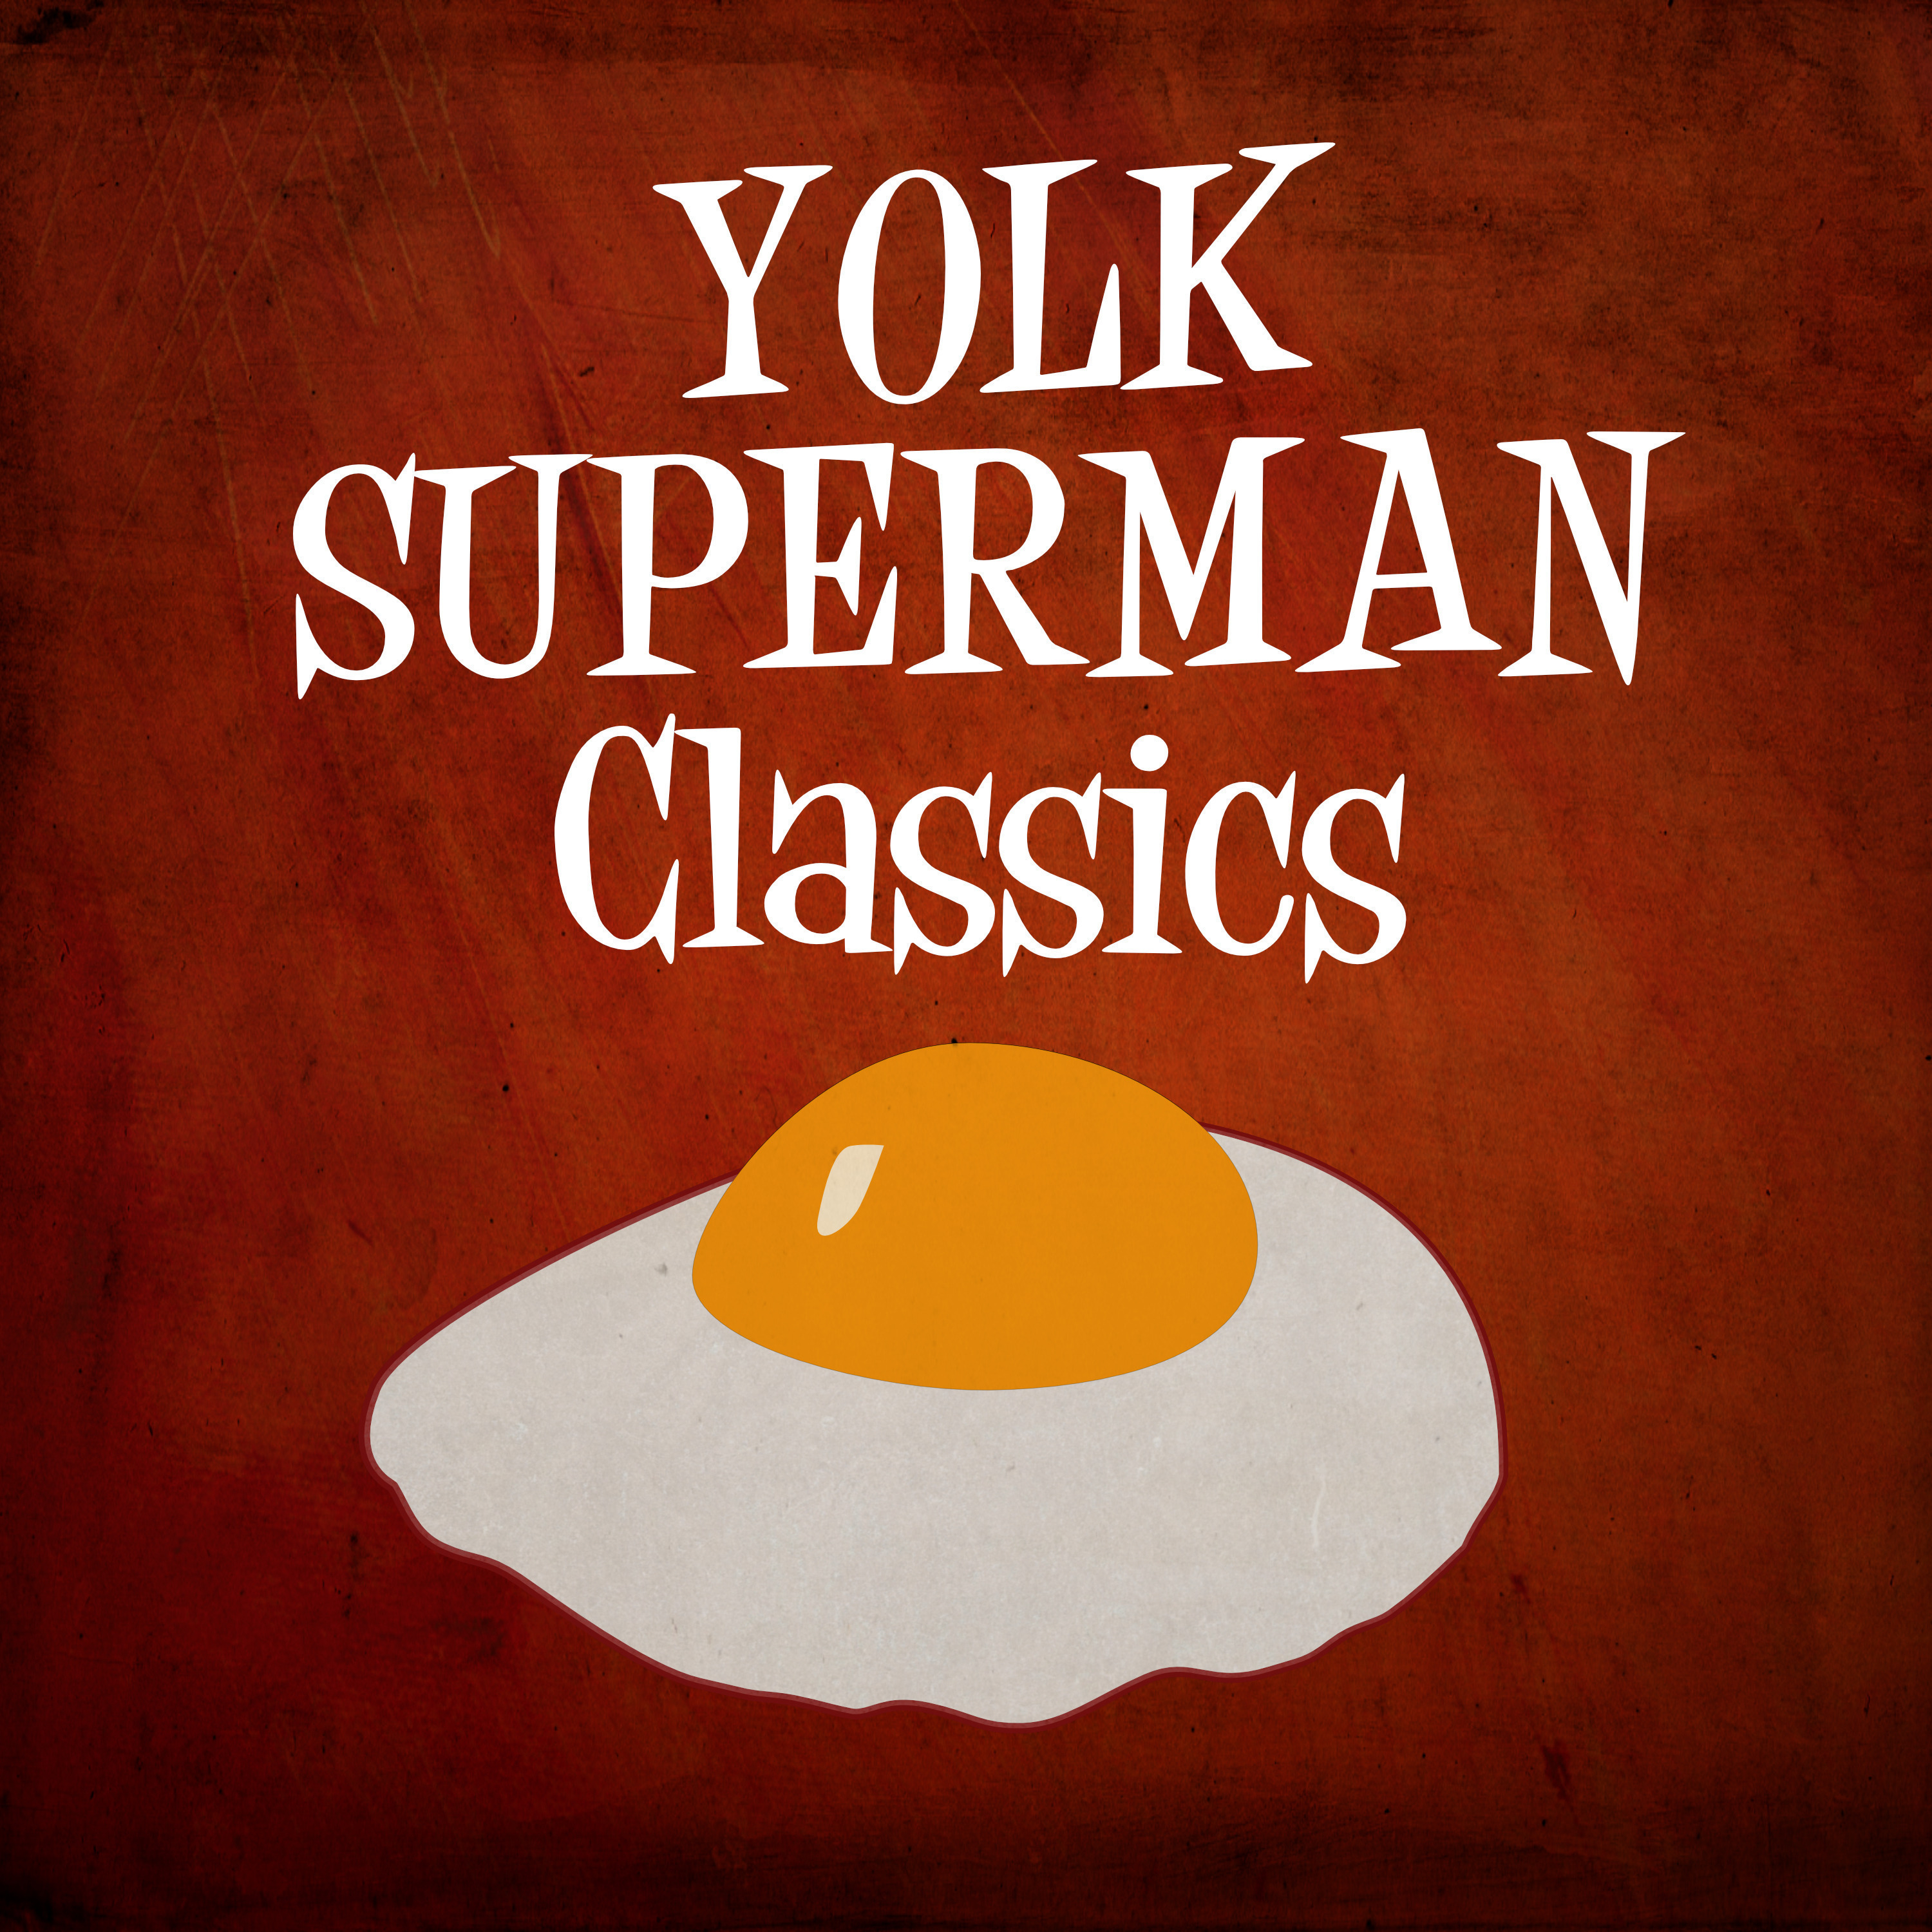 44. Yolk Superman Classics